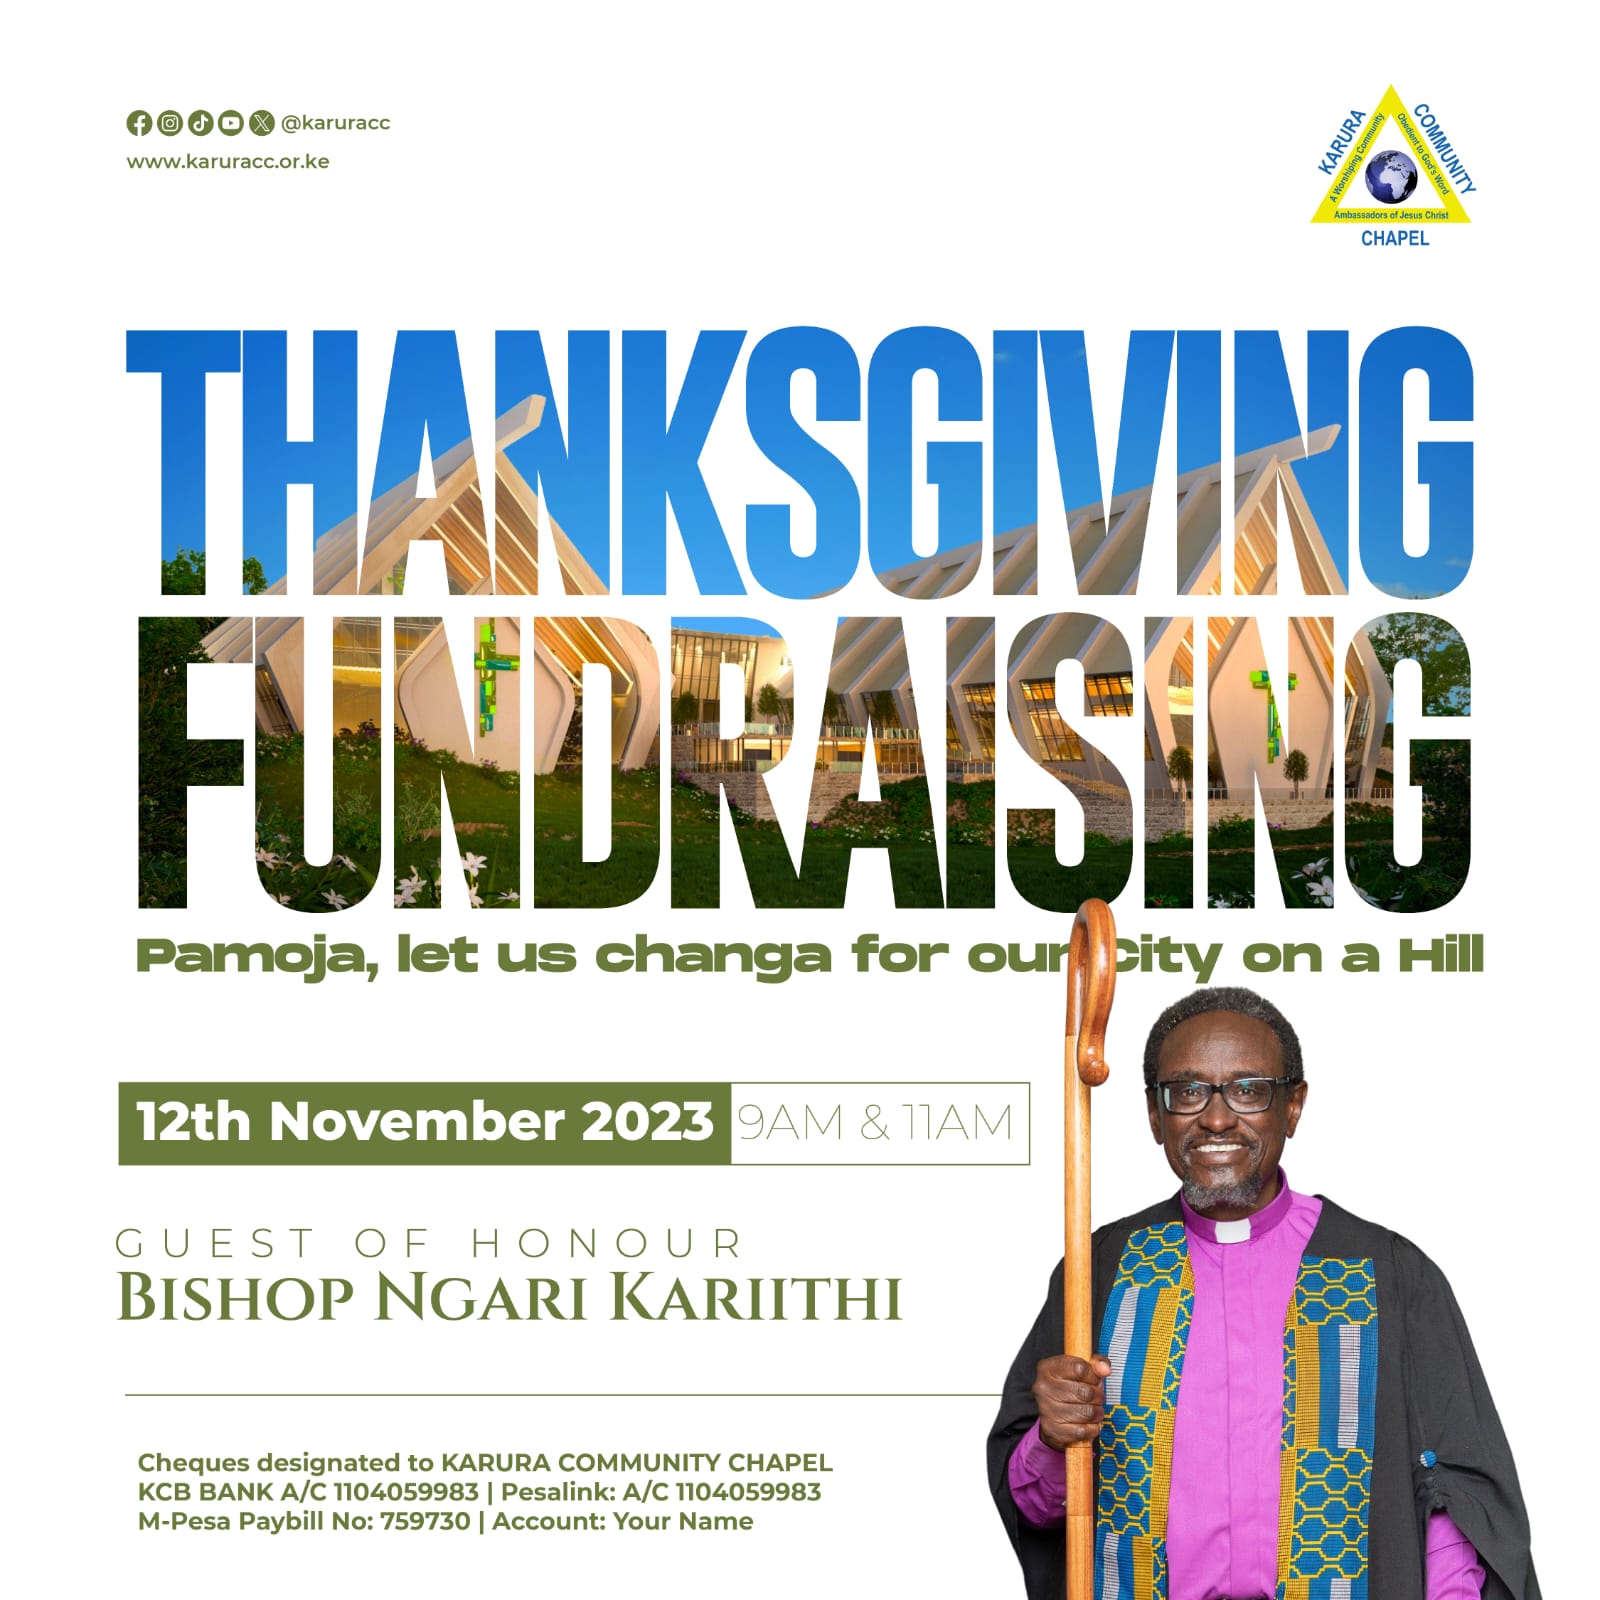 thanksgiving fundraising
karura community chapel
ruaka
churches near ruaka